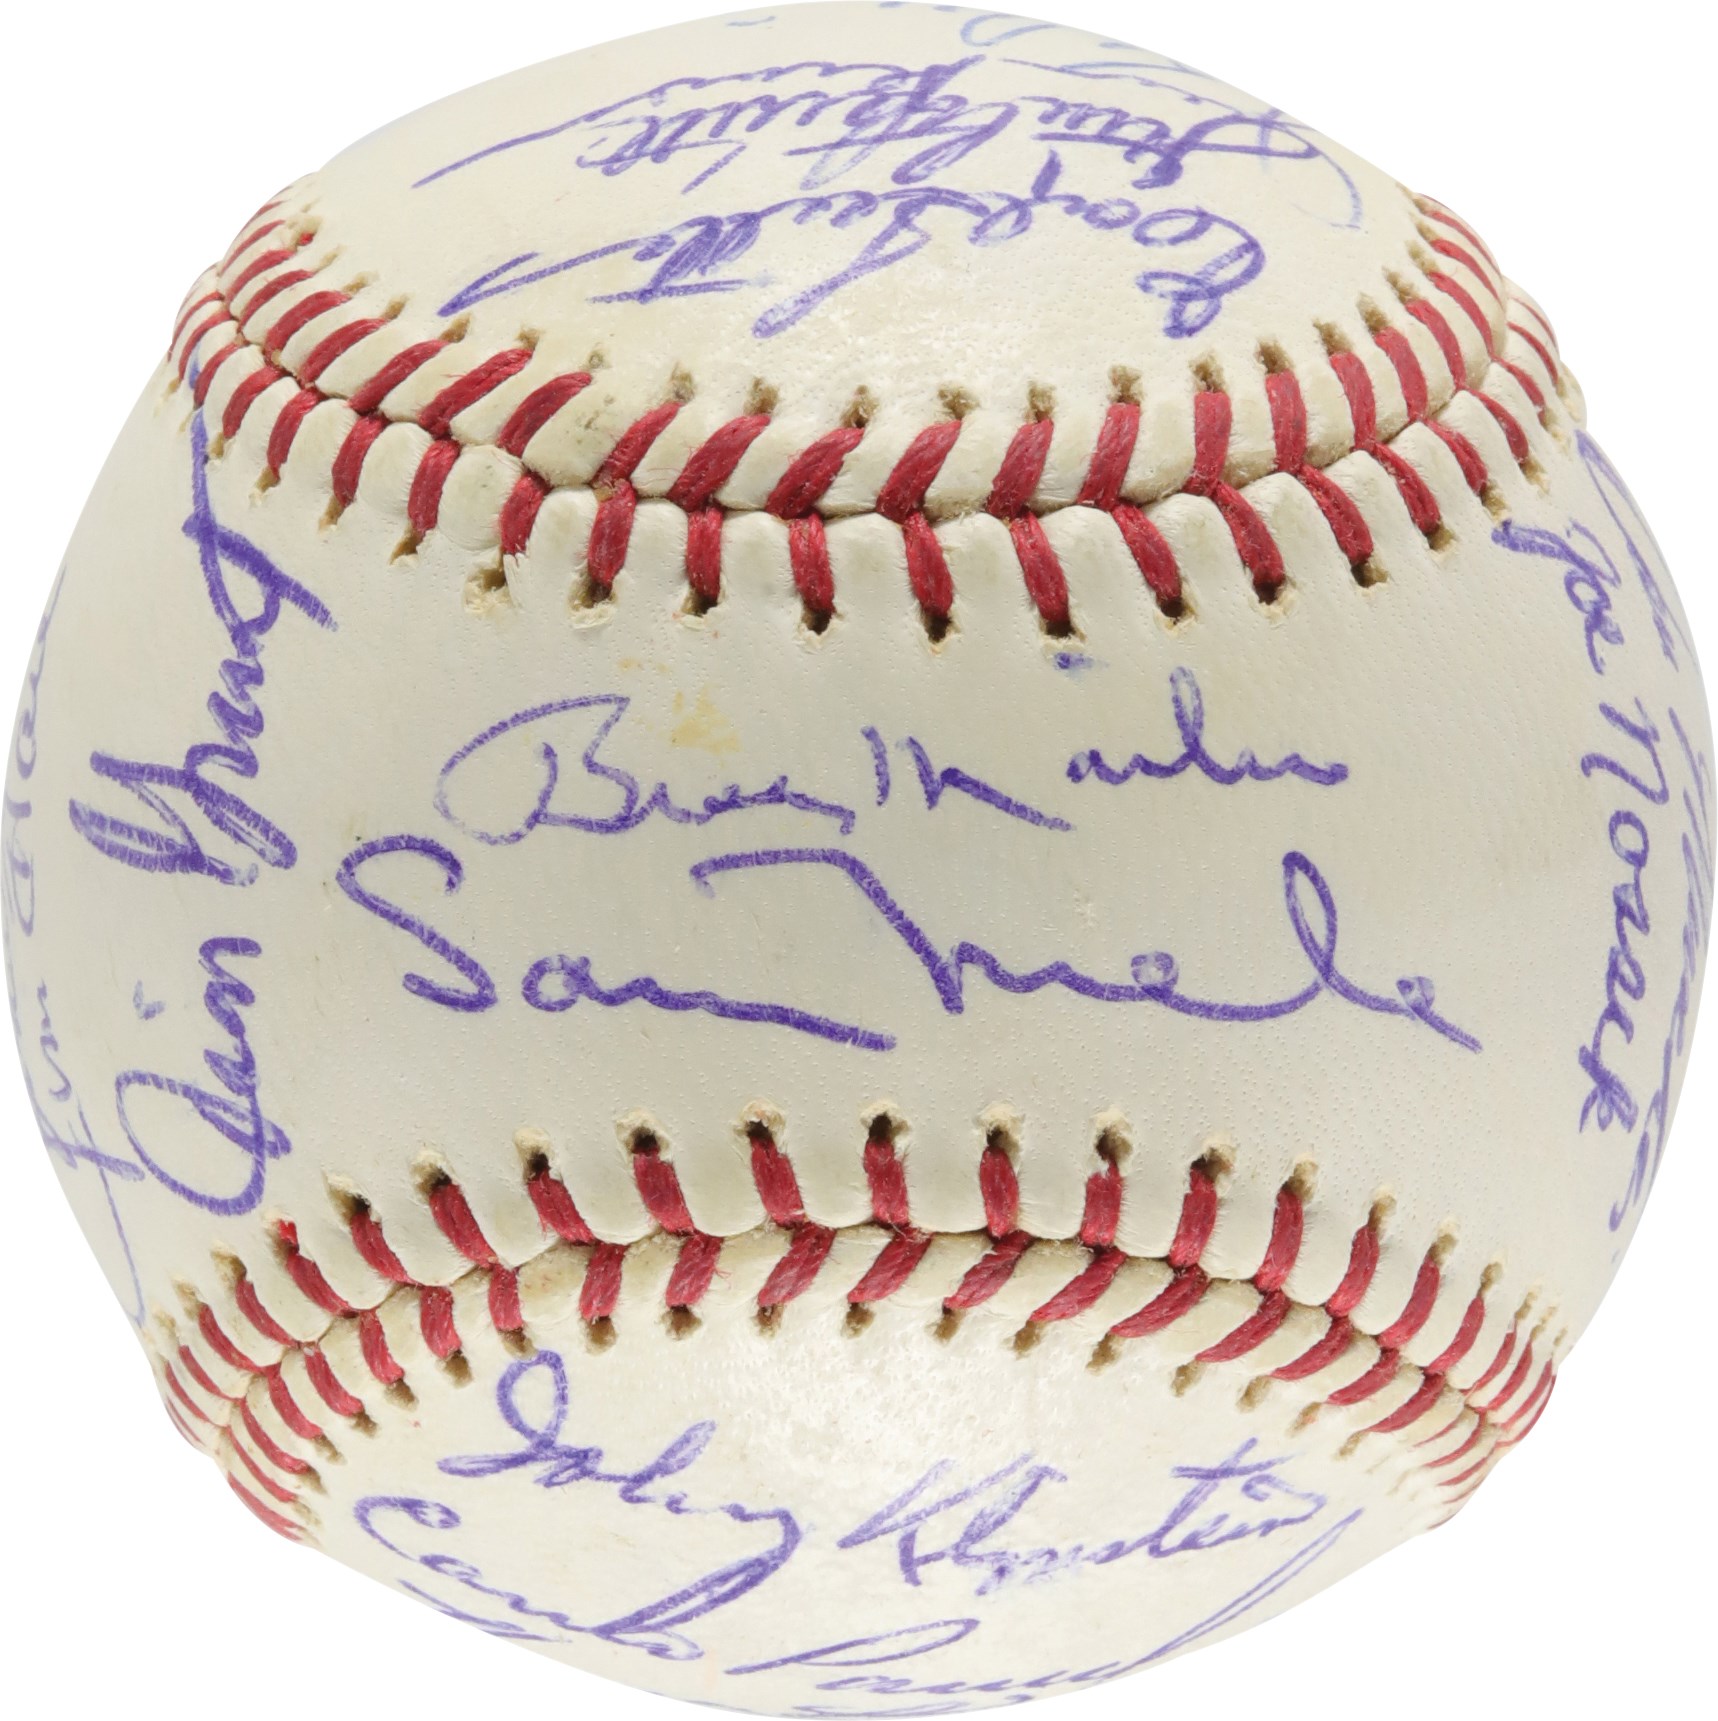 Baseball Autographs - High Grade 1965 American League Champion Minnesota Twins Team-Signed Baseball